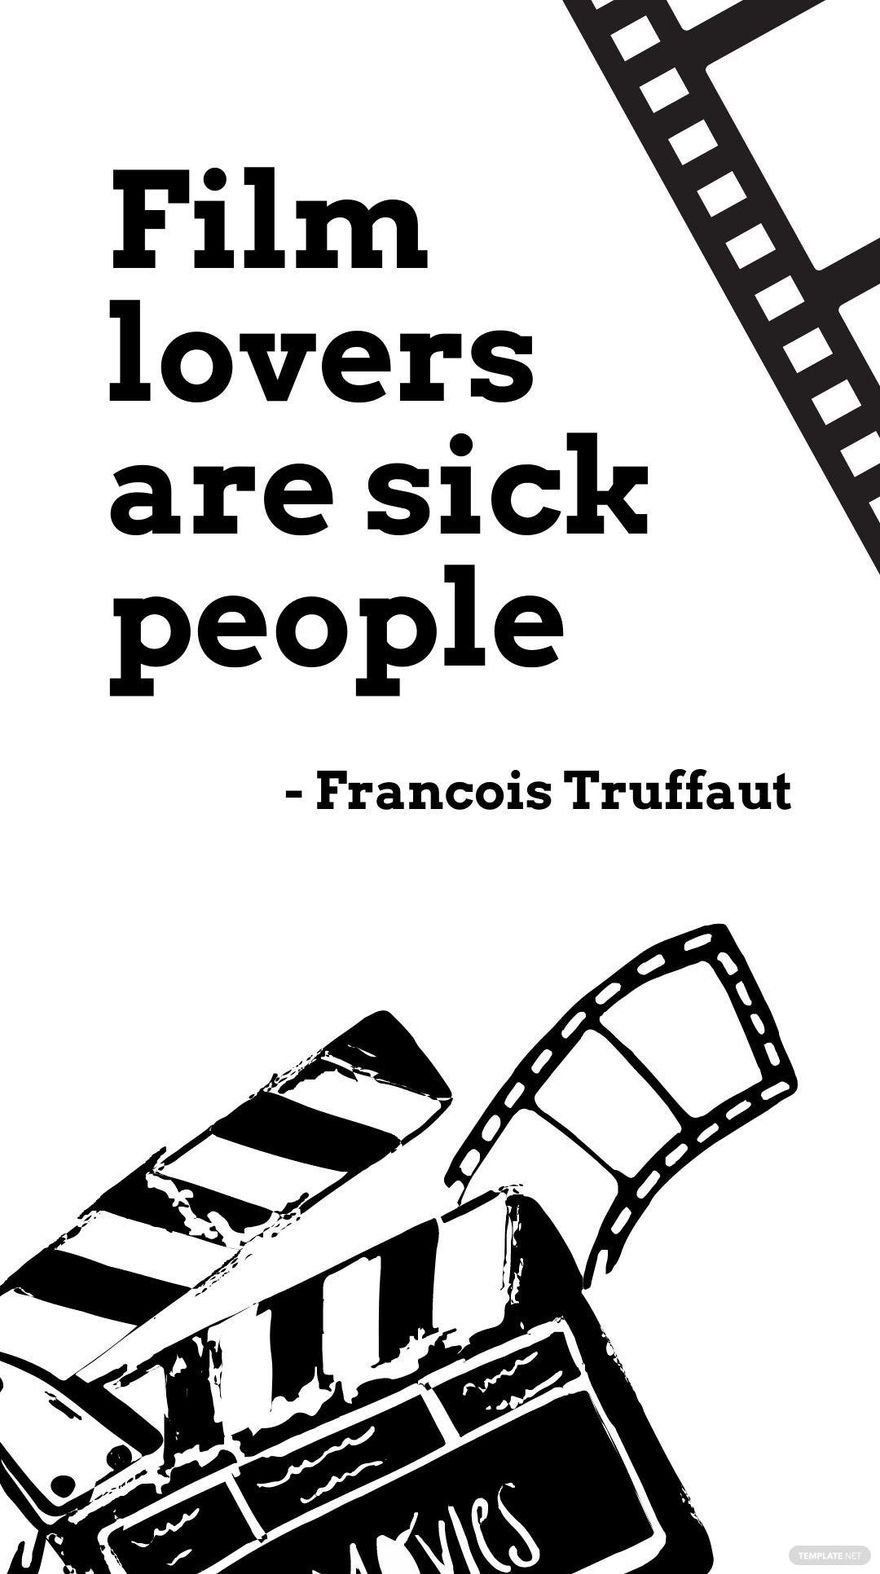 Francois Truffaut - Film lovers are sick people